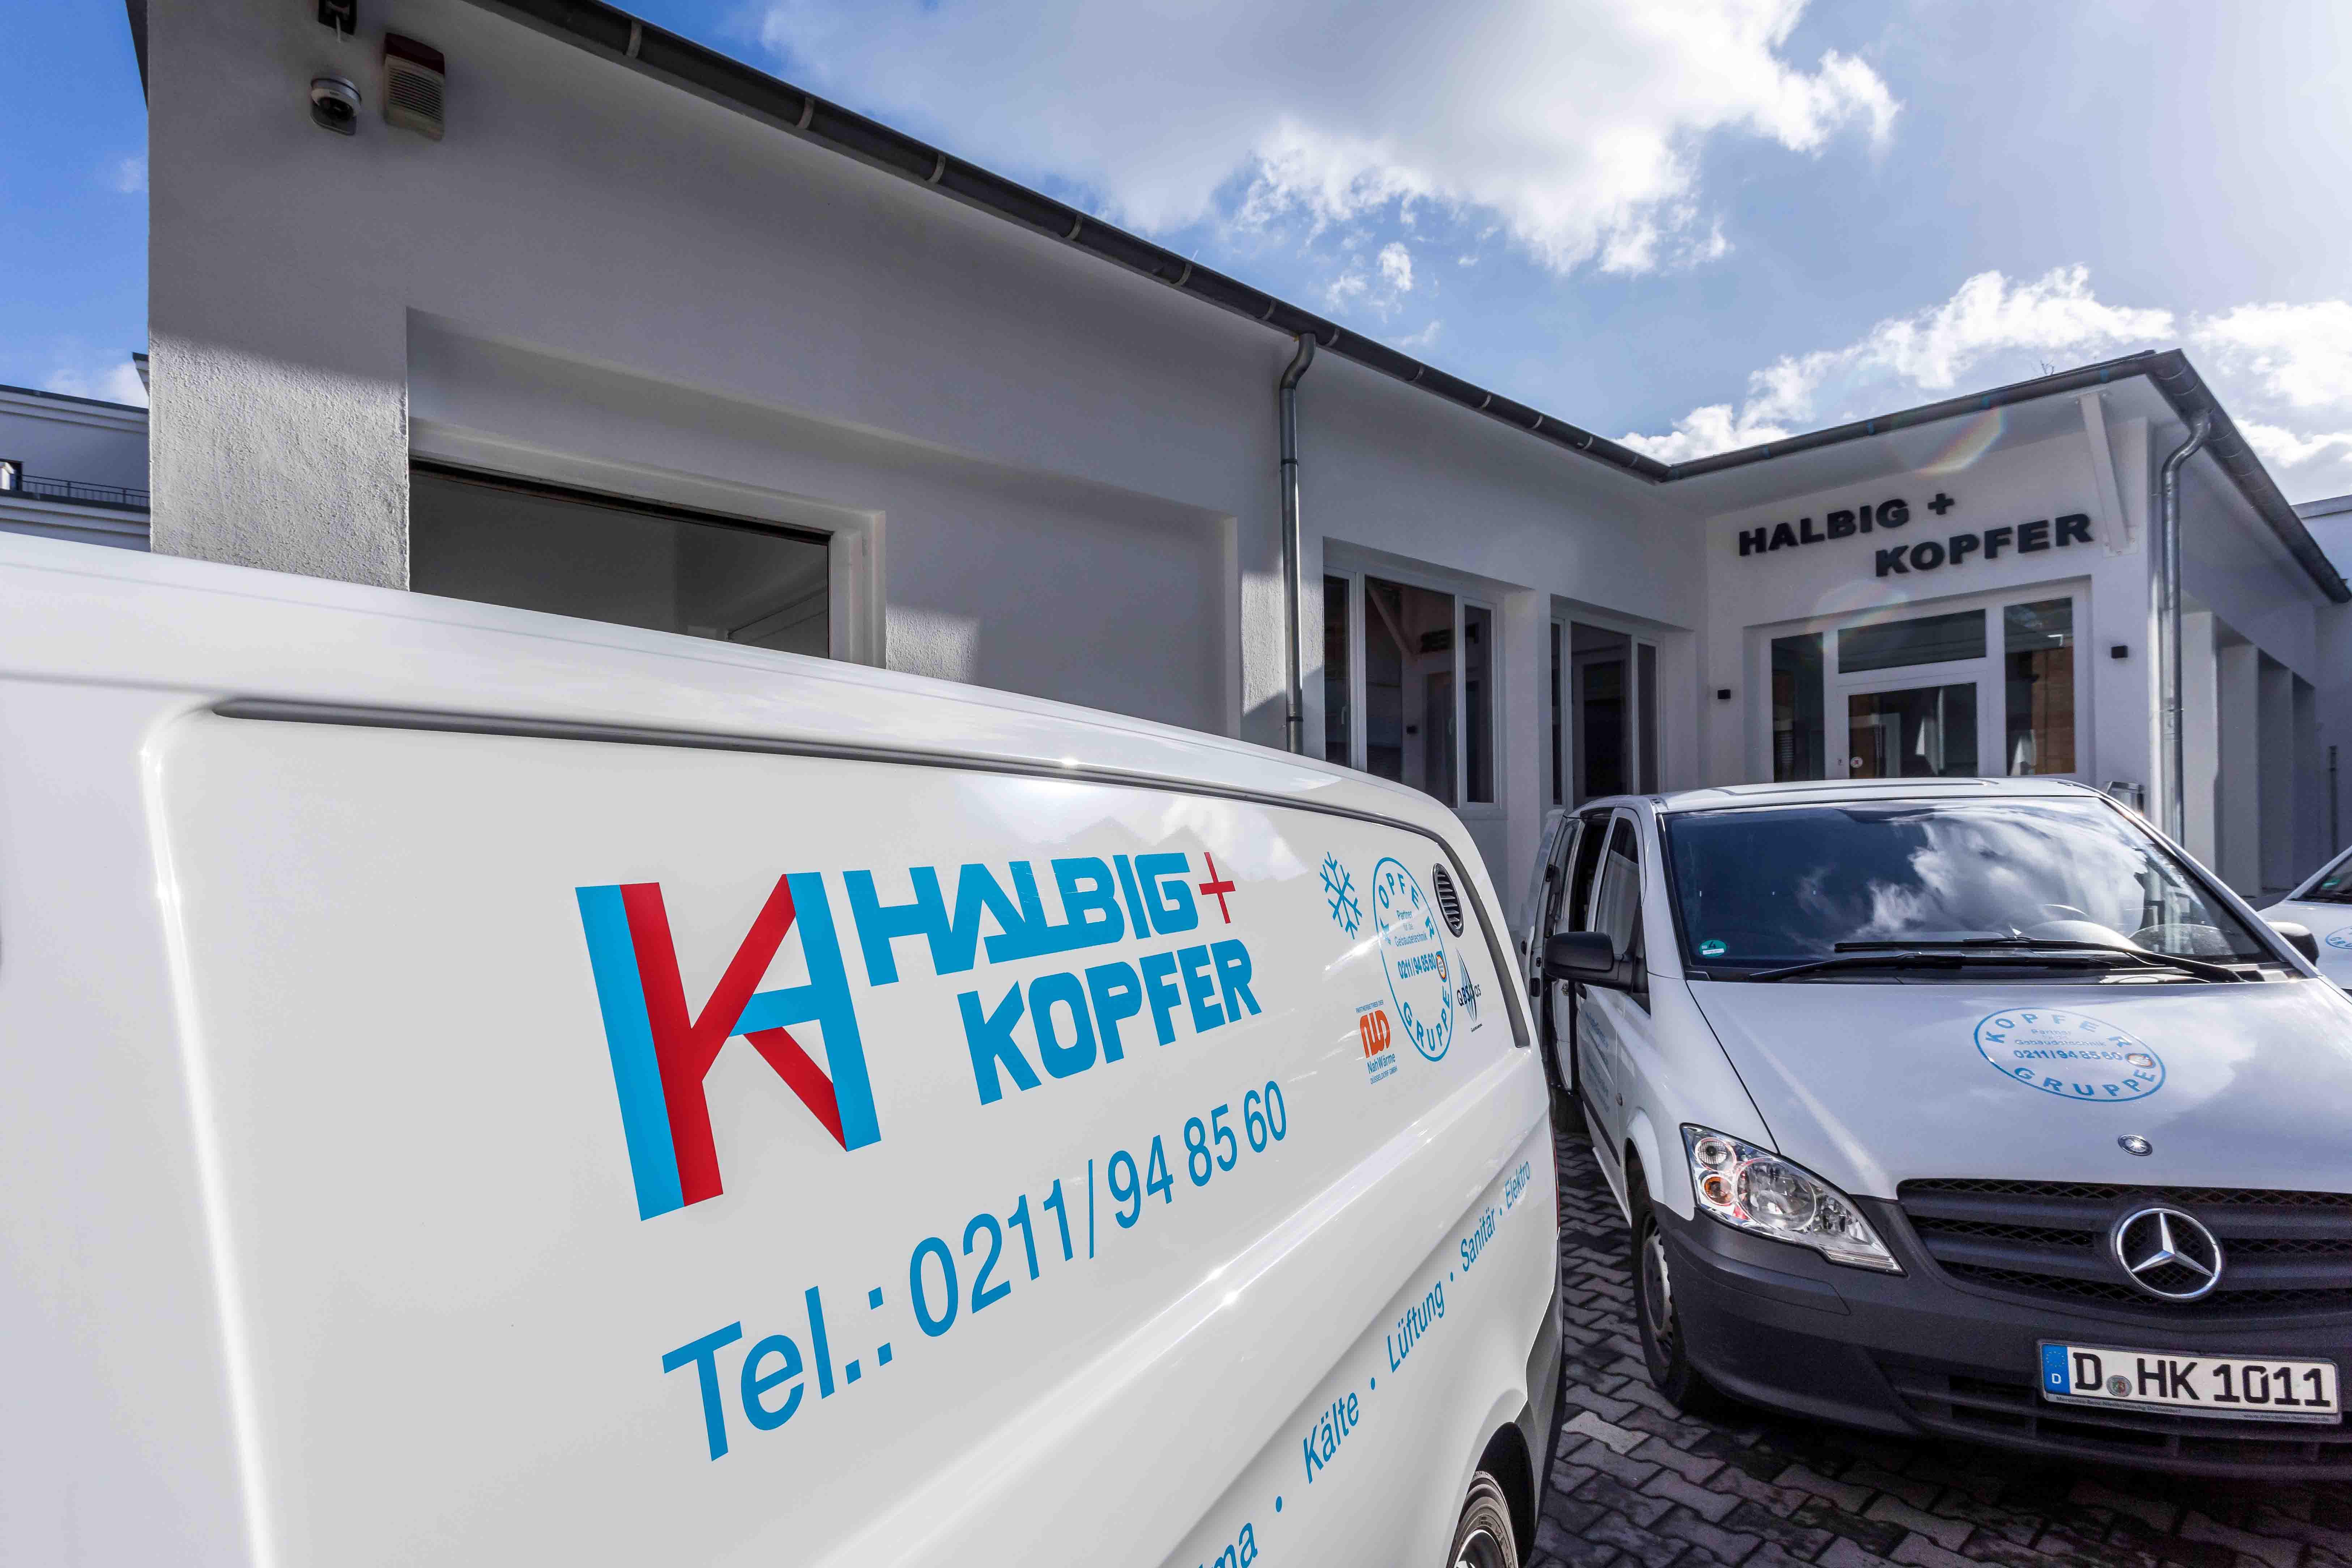 Halbig + Kopfer GmbH Sanitärfachbetrieb Düsseldorf